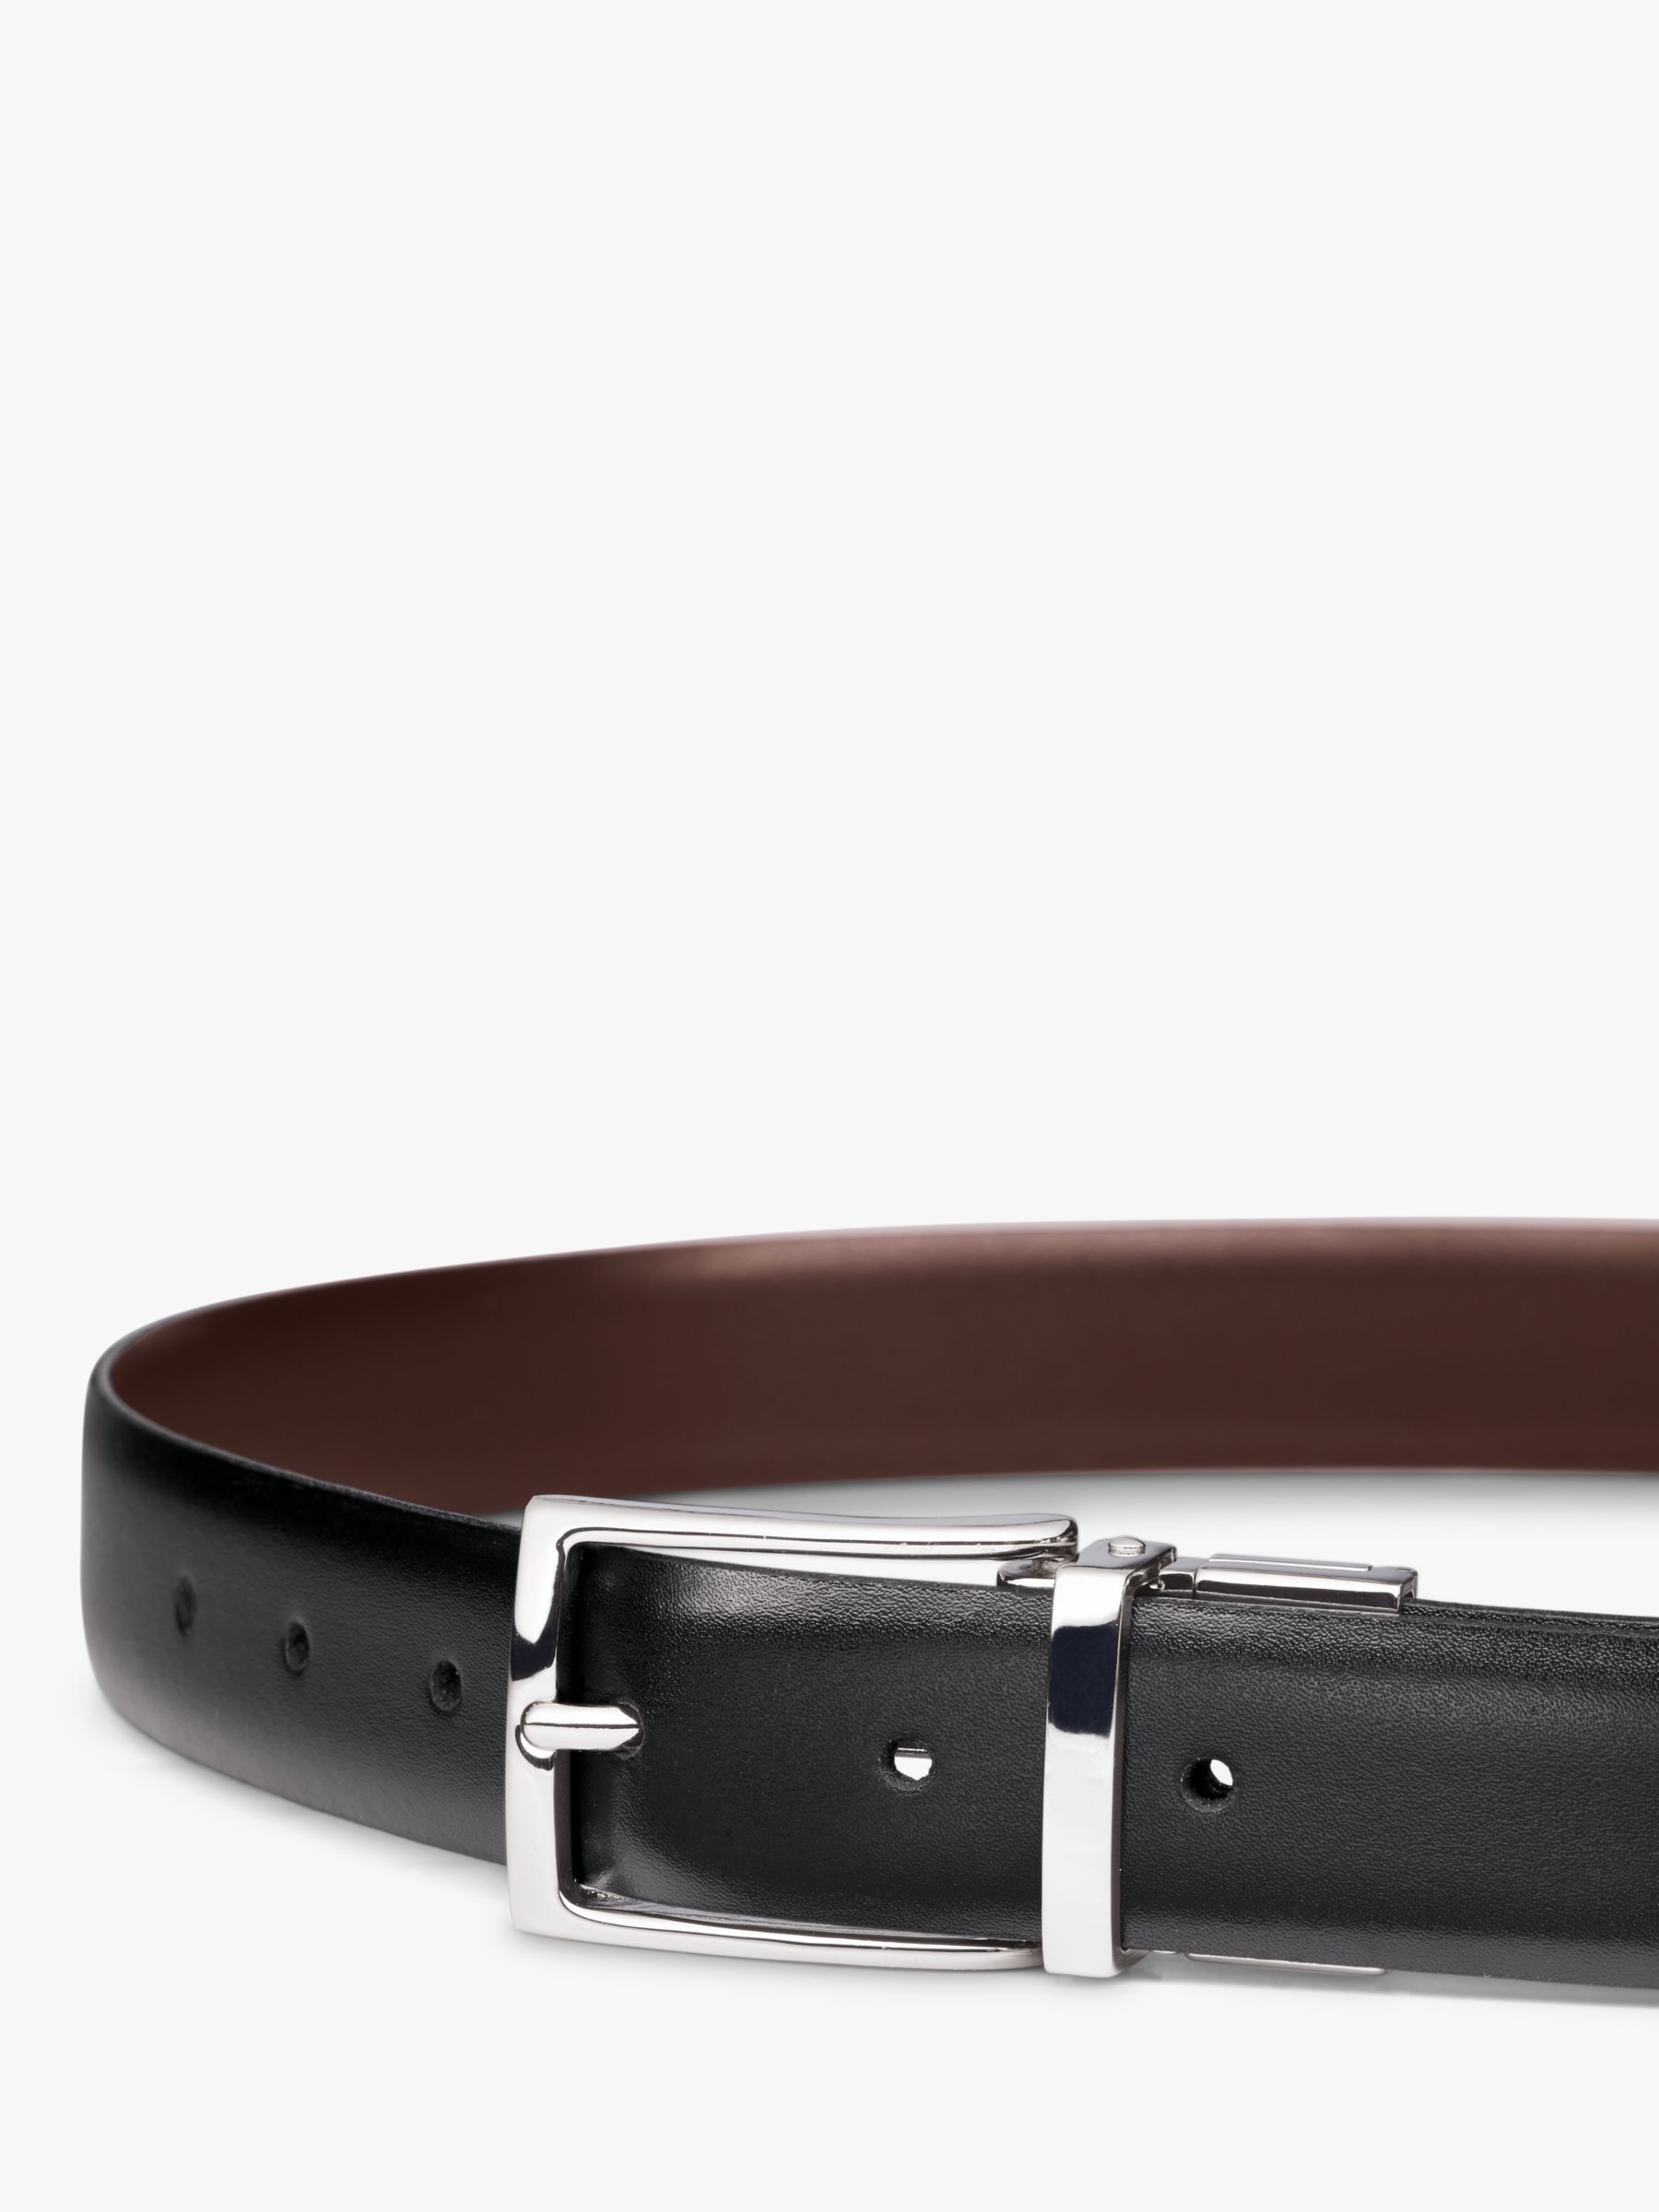 Charles Tyrwhitt Reversible Leather Belt, Black/Chocolate, 32